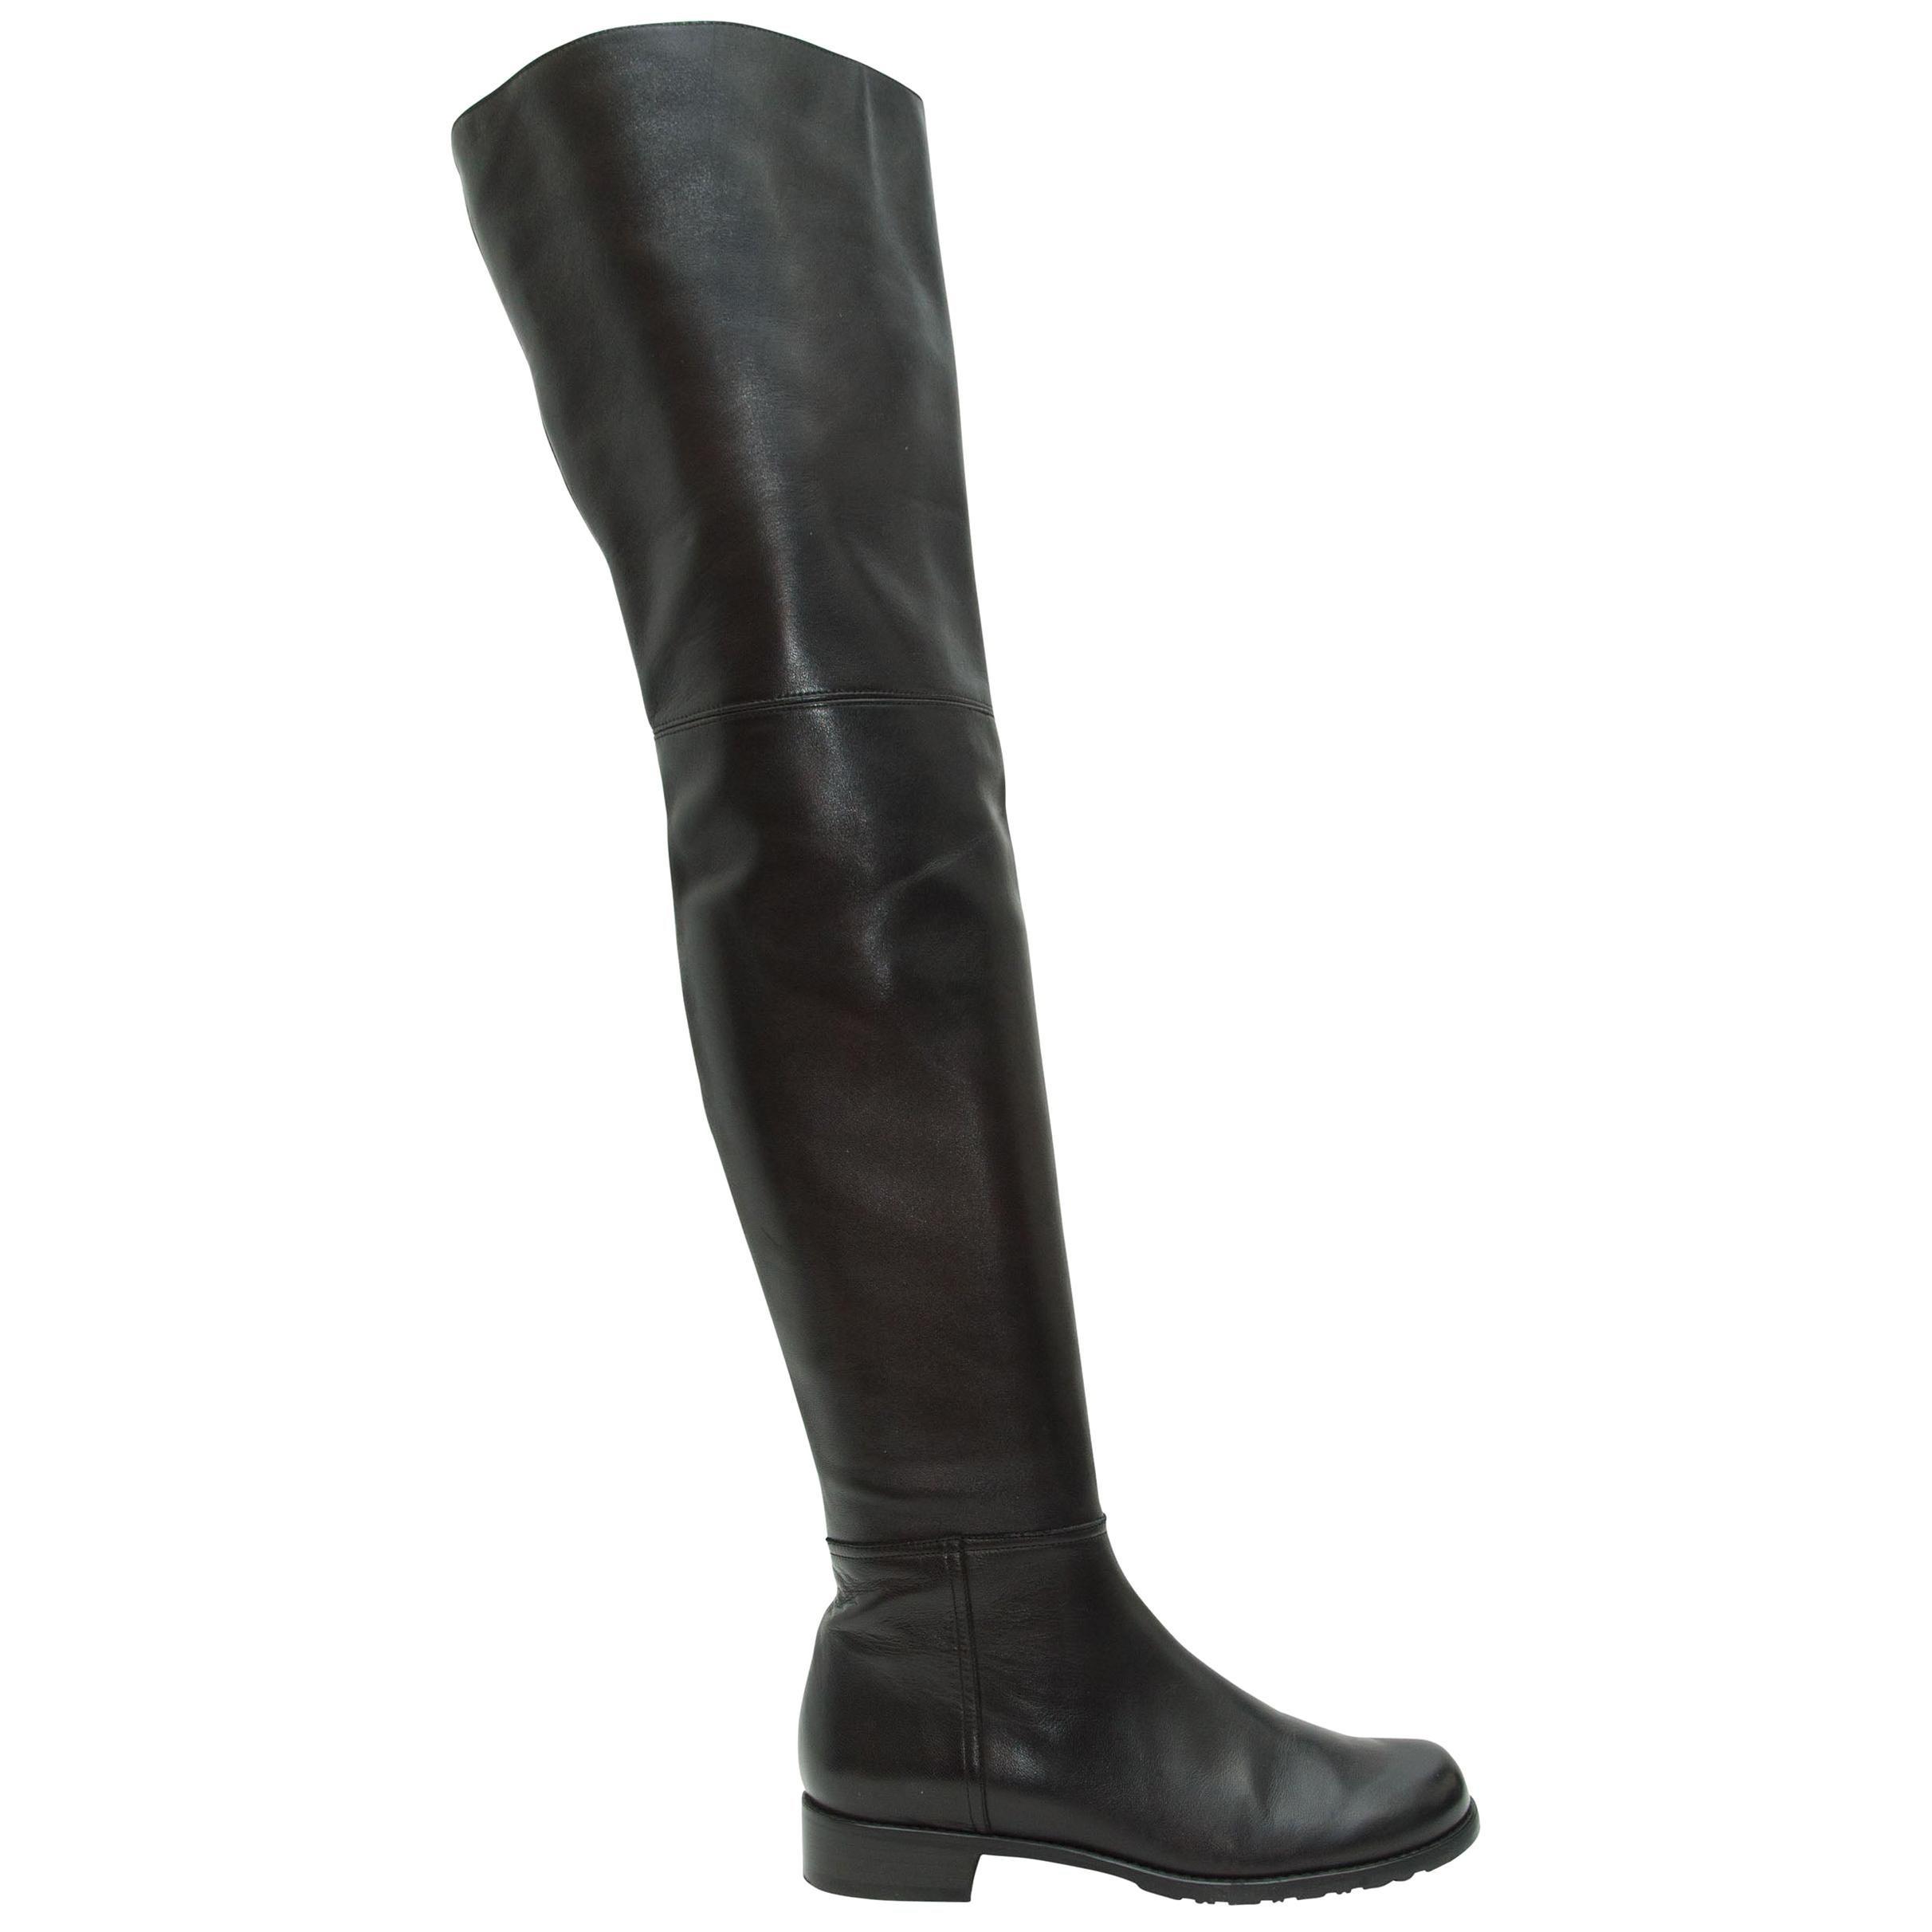 Stuart Weitzman Black Leather Thigh-High Boots